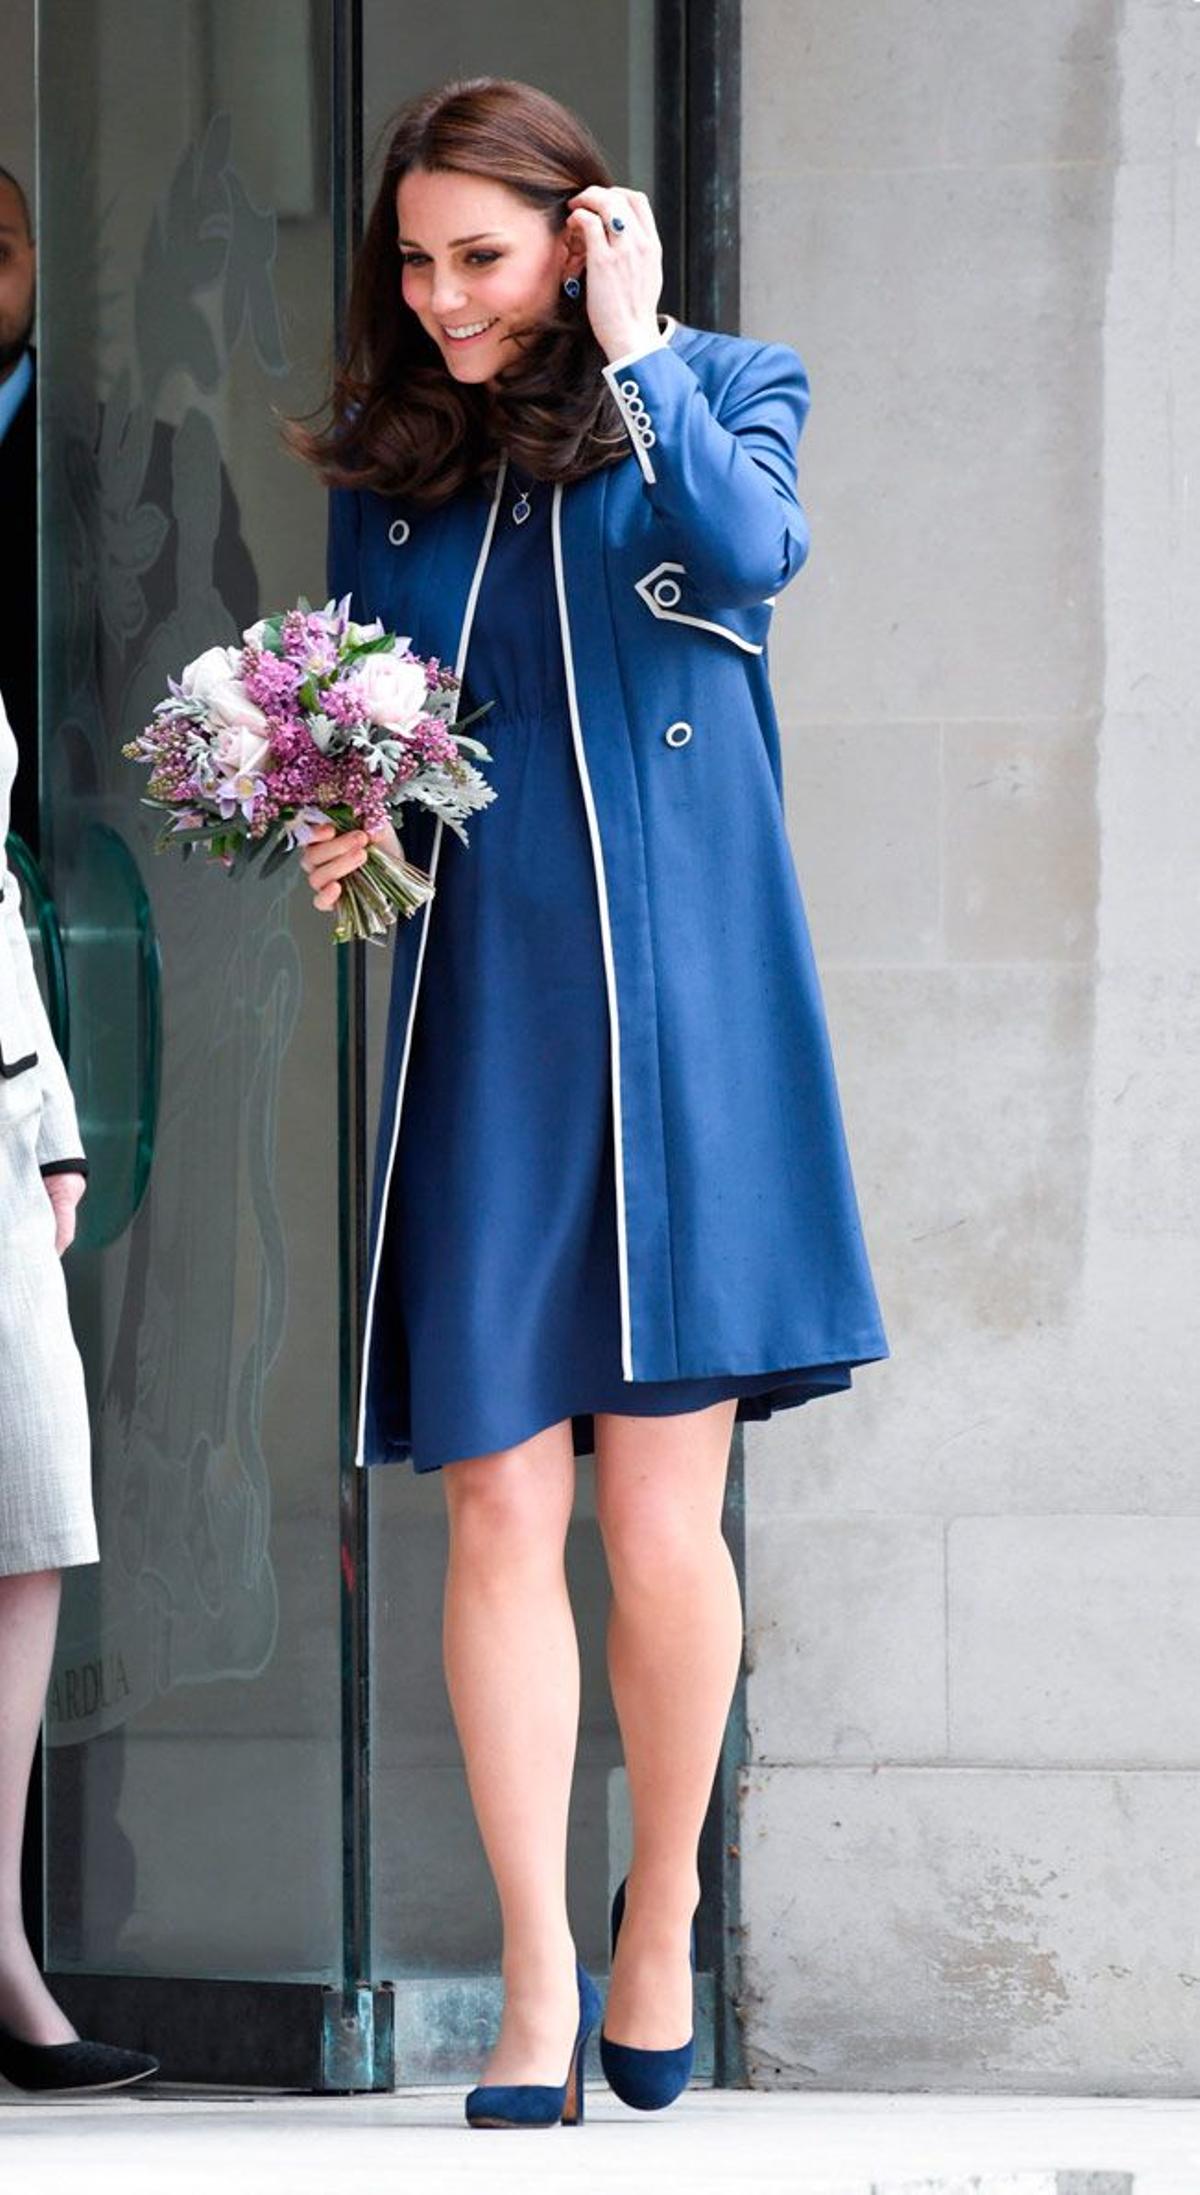 Kate Middleton con vestido y abrigo azul de Jenny Packham en Londres